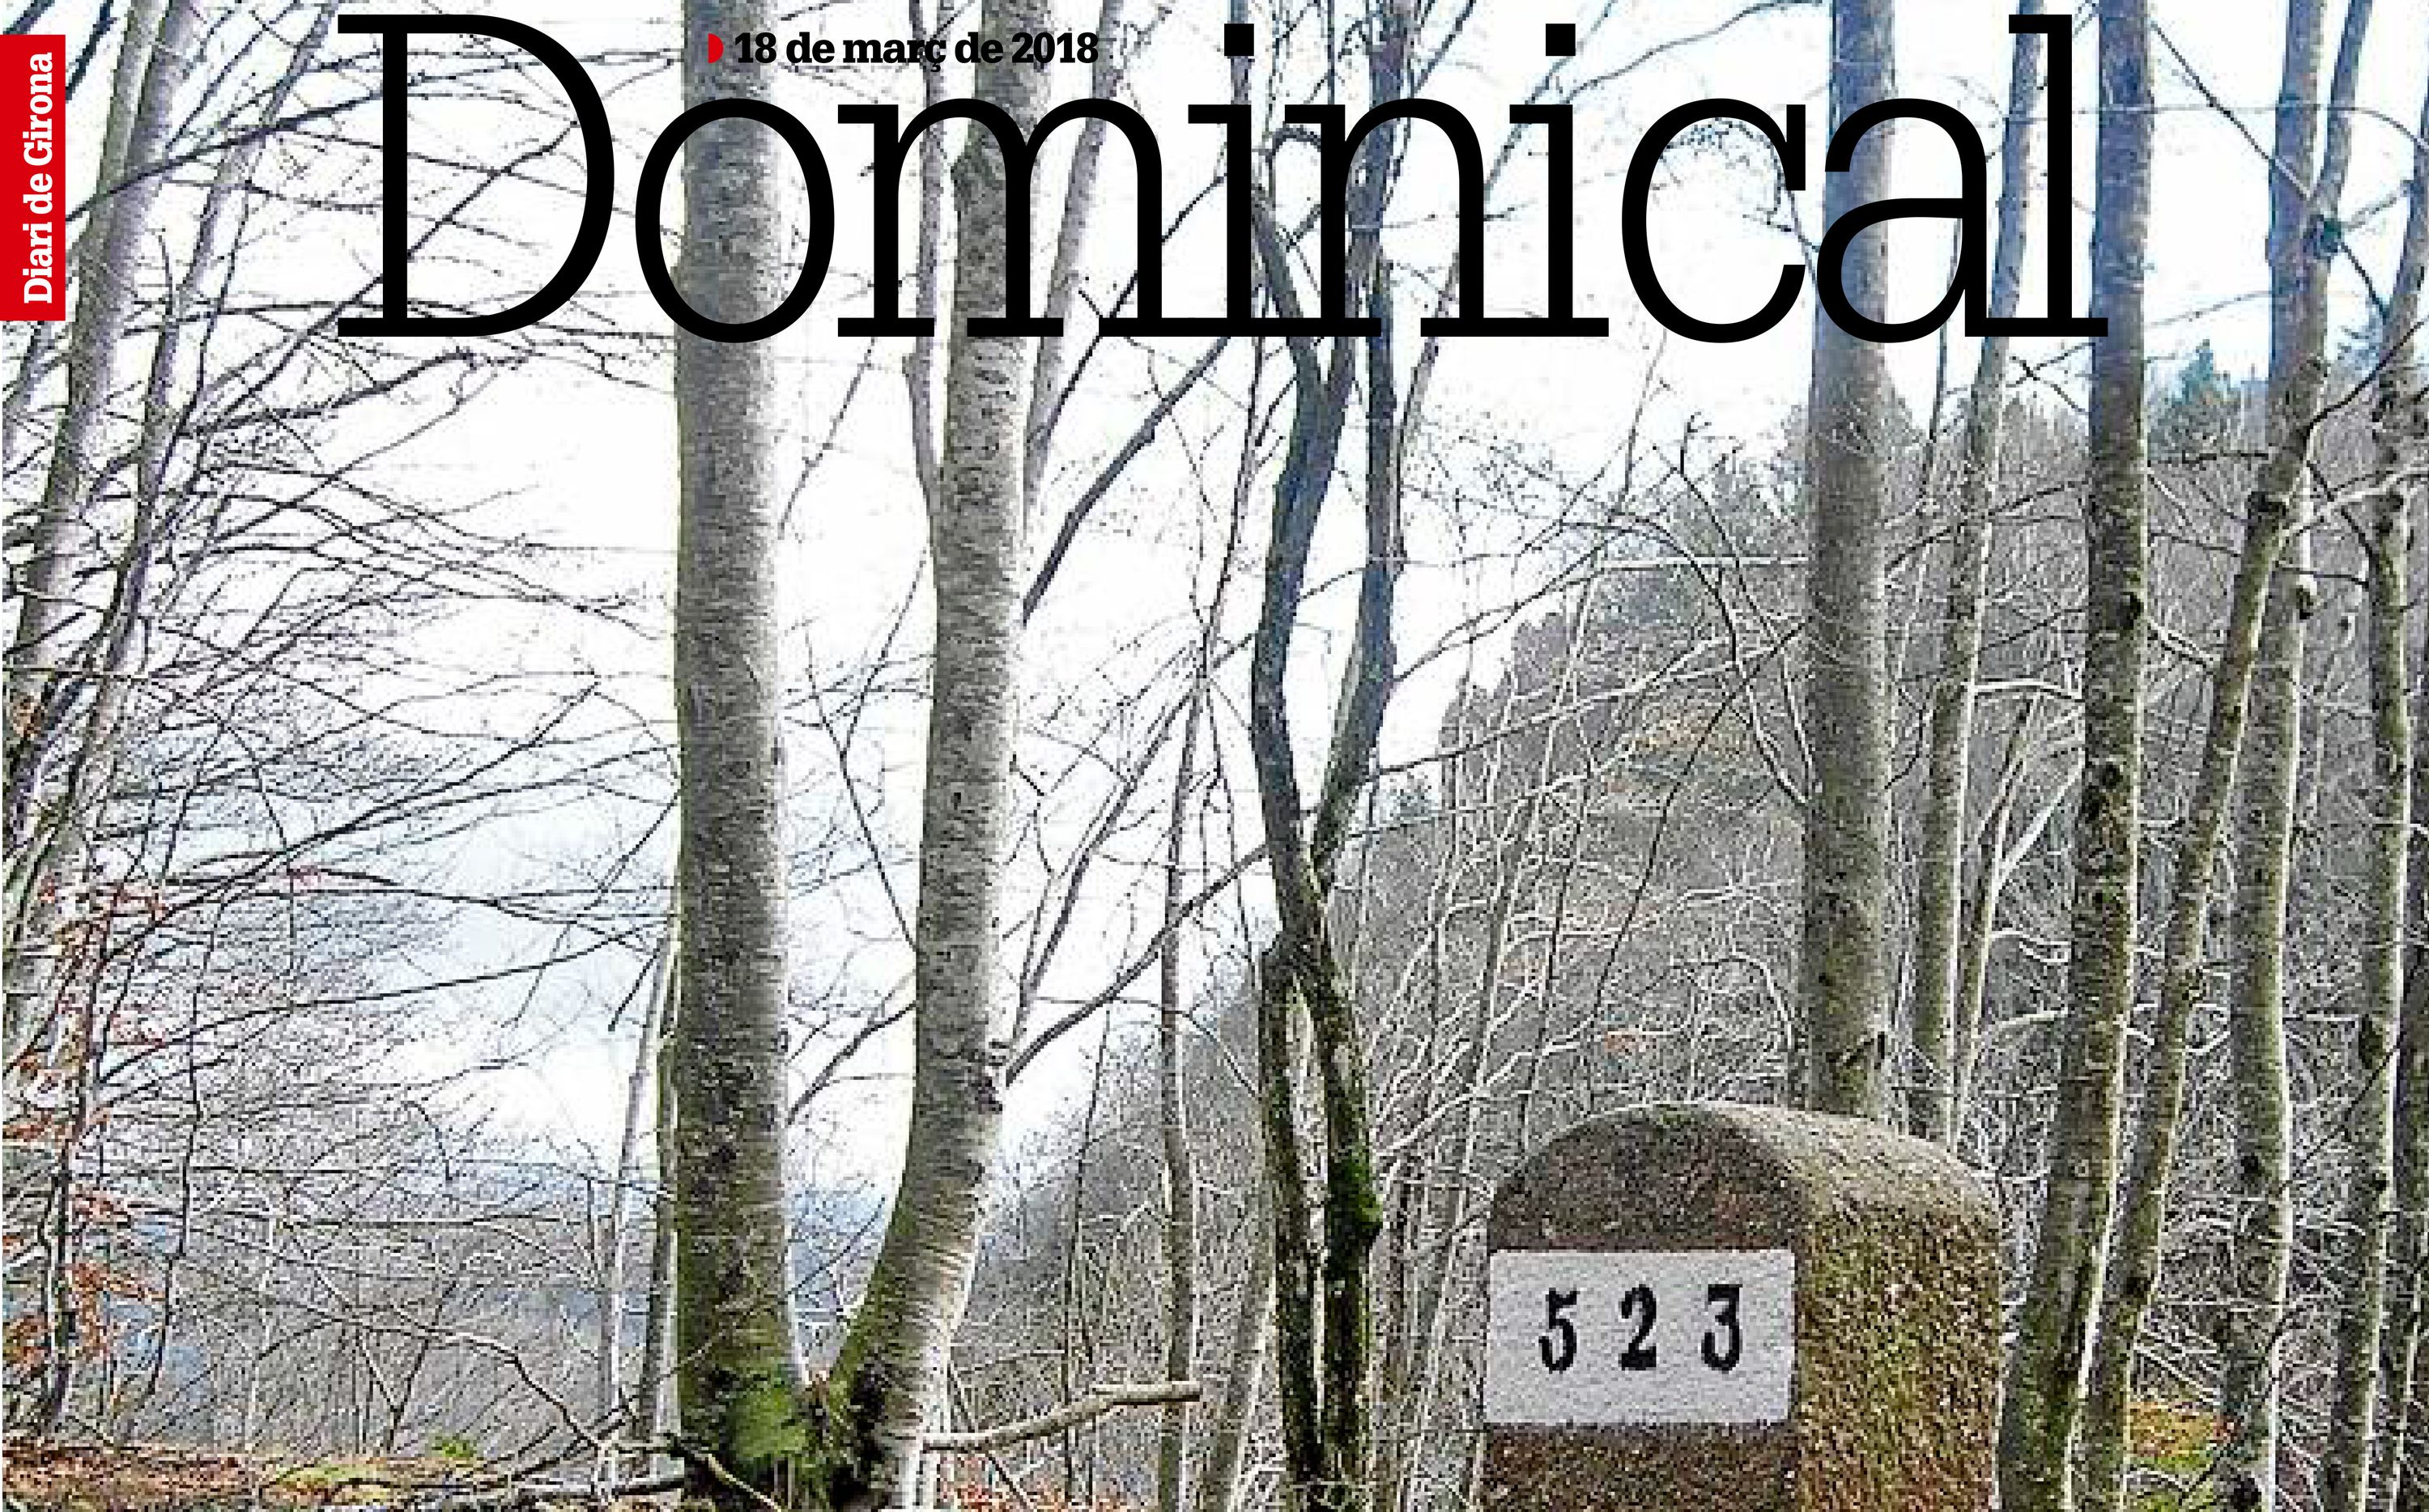 Dues mirades a la frontera - Dominical Diari de Girona del 18 marzo 2018